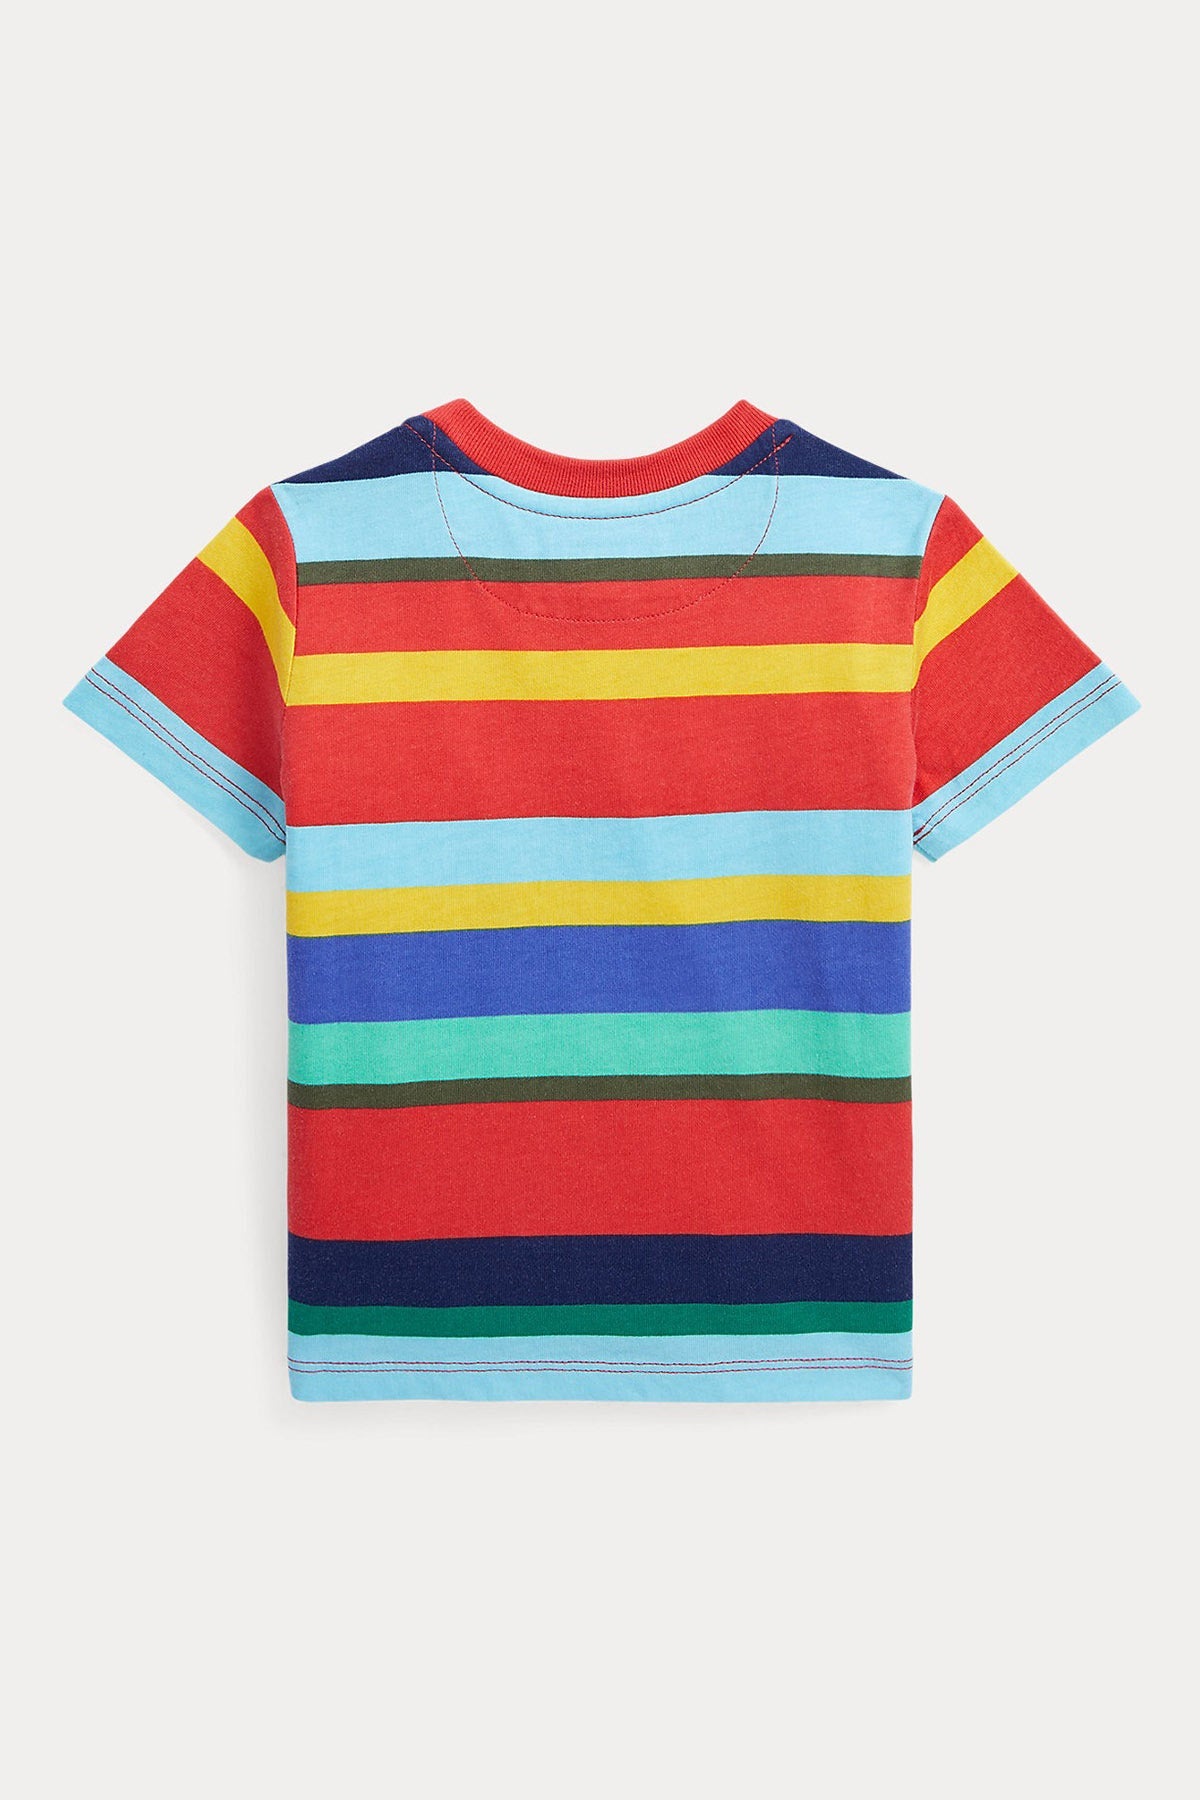 Polo Ralph Lauren Kids 9-18 Aylık Erkek Bebek Renk Bloklu Polo Bear T-shirt